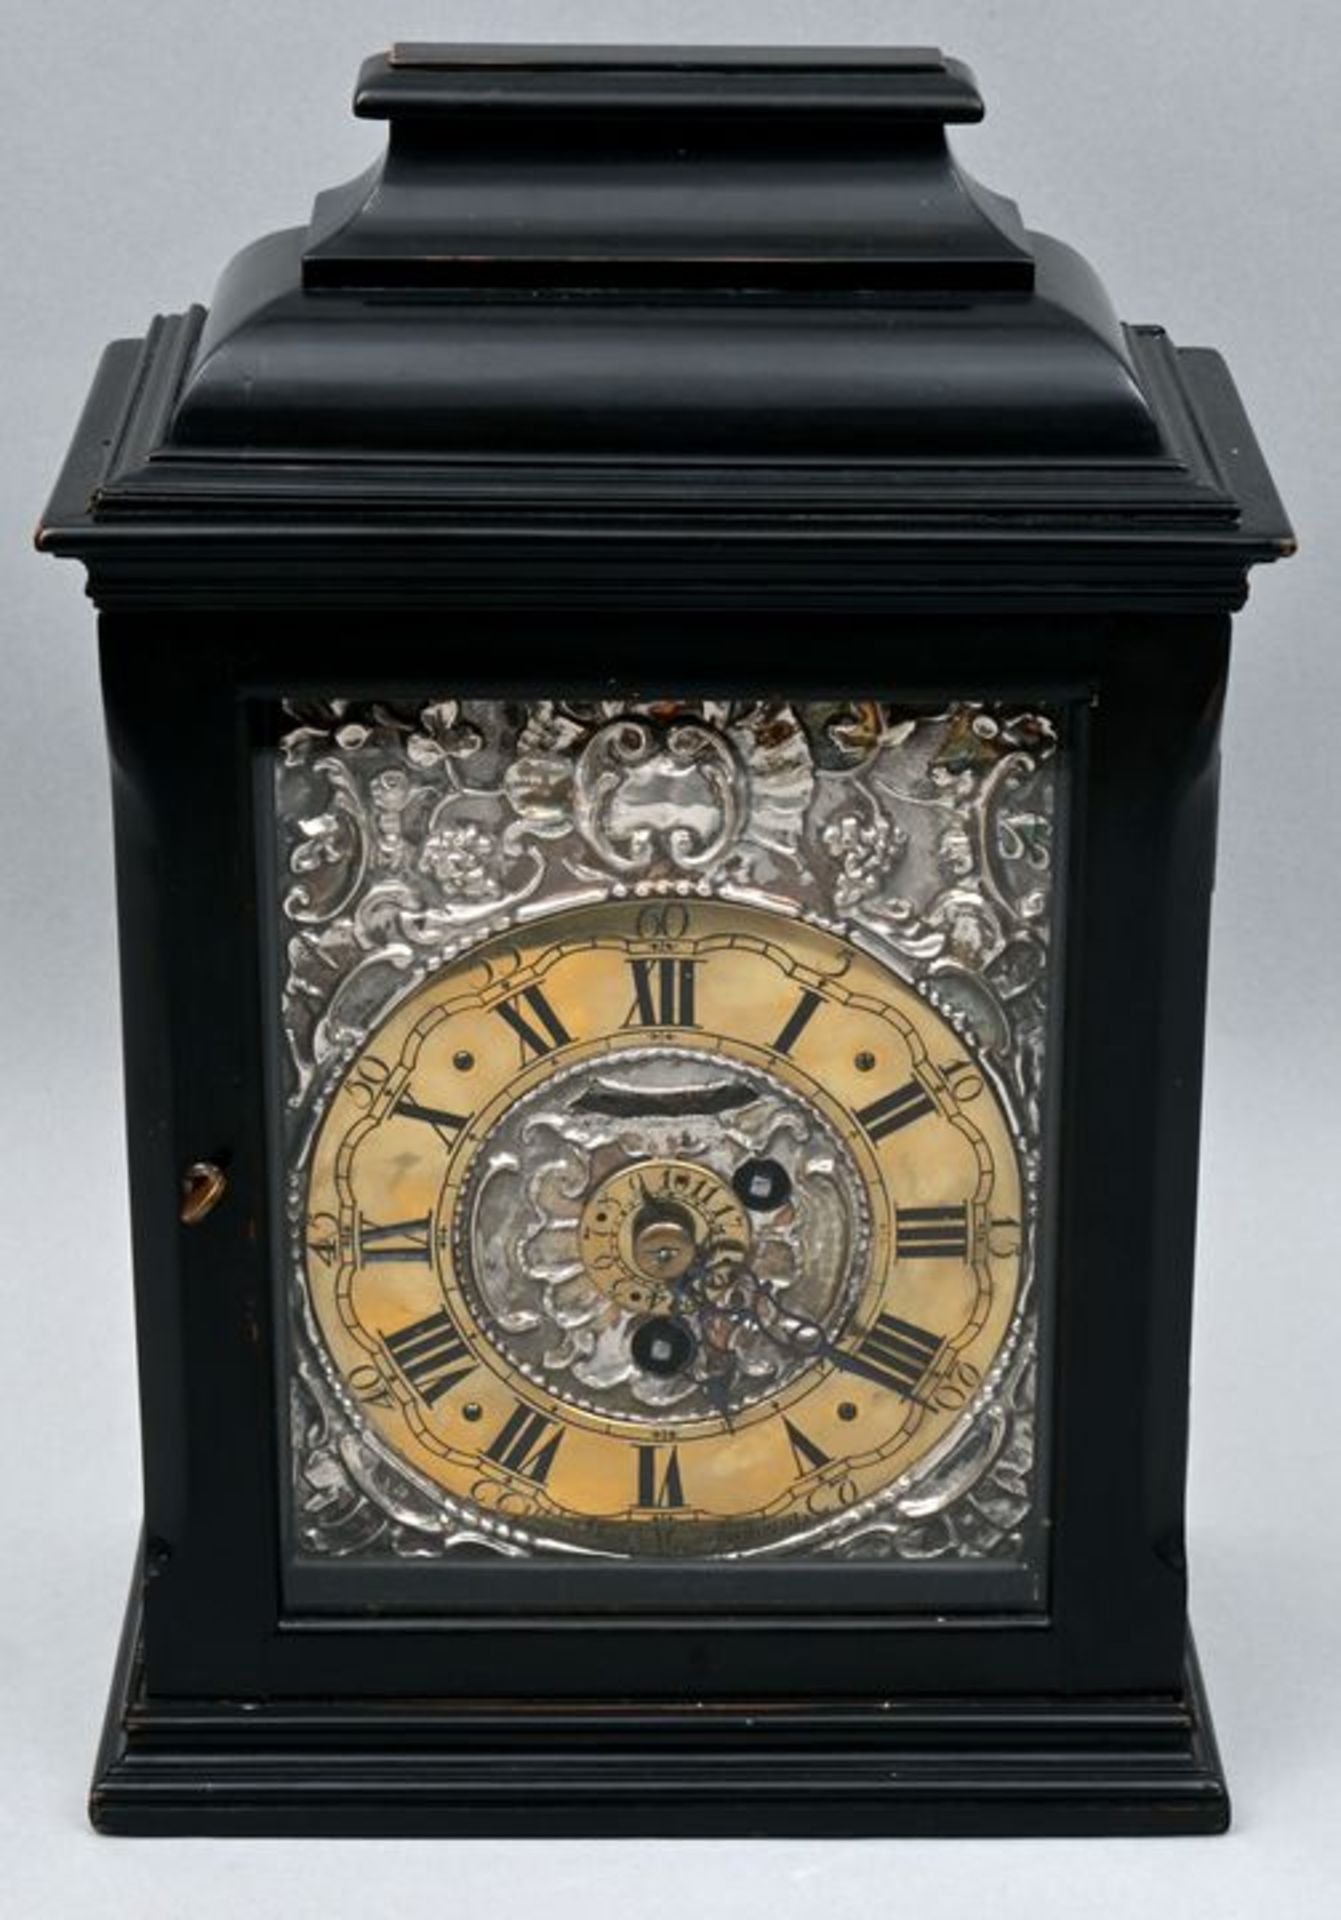 Stockuhr, U. Hepp Augs. / Bracket clock